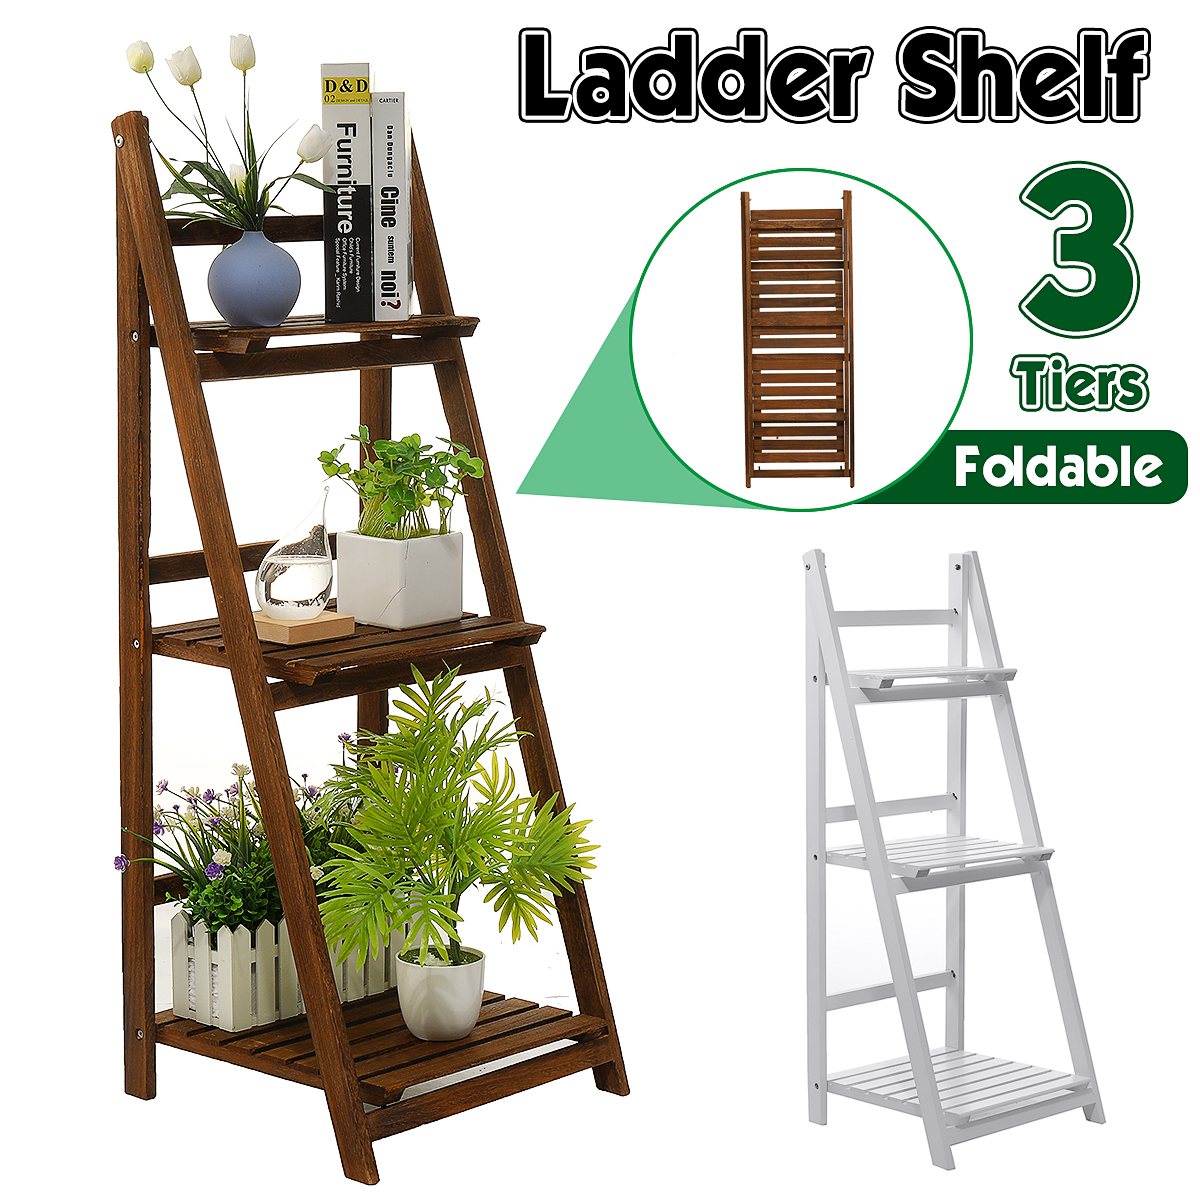 3-Tiers-Ladder-Storage-Shelf-Foldable-Plant-Flower-Pot-Display-Stand-Bookshelf-Storage-Rack-Home-Off-1759121-1